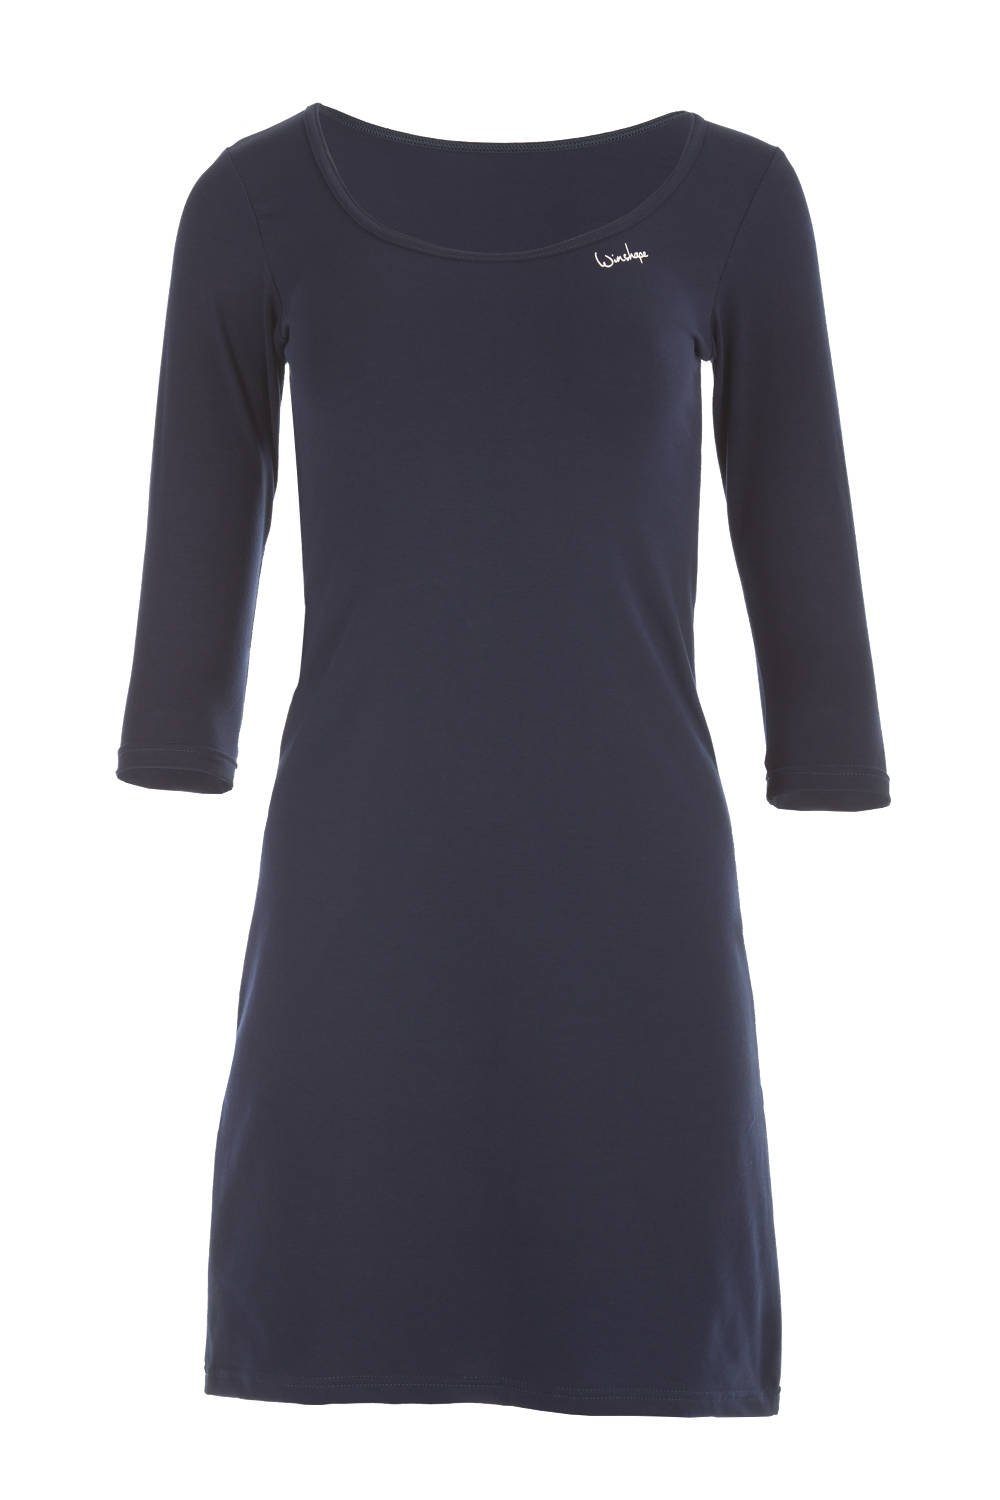 Winshape A-Linien-Kleid WK2 3/4-Arm night blue